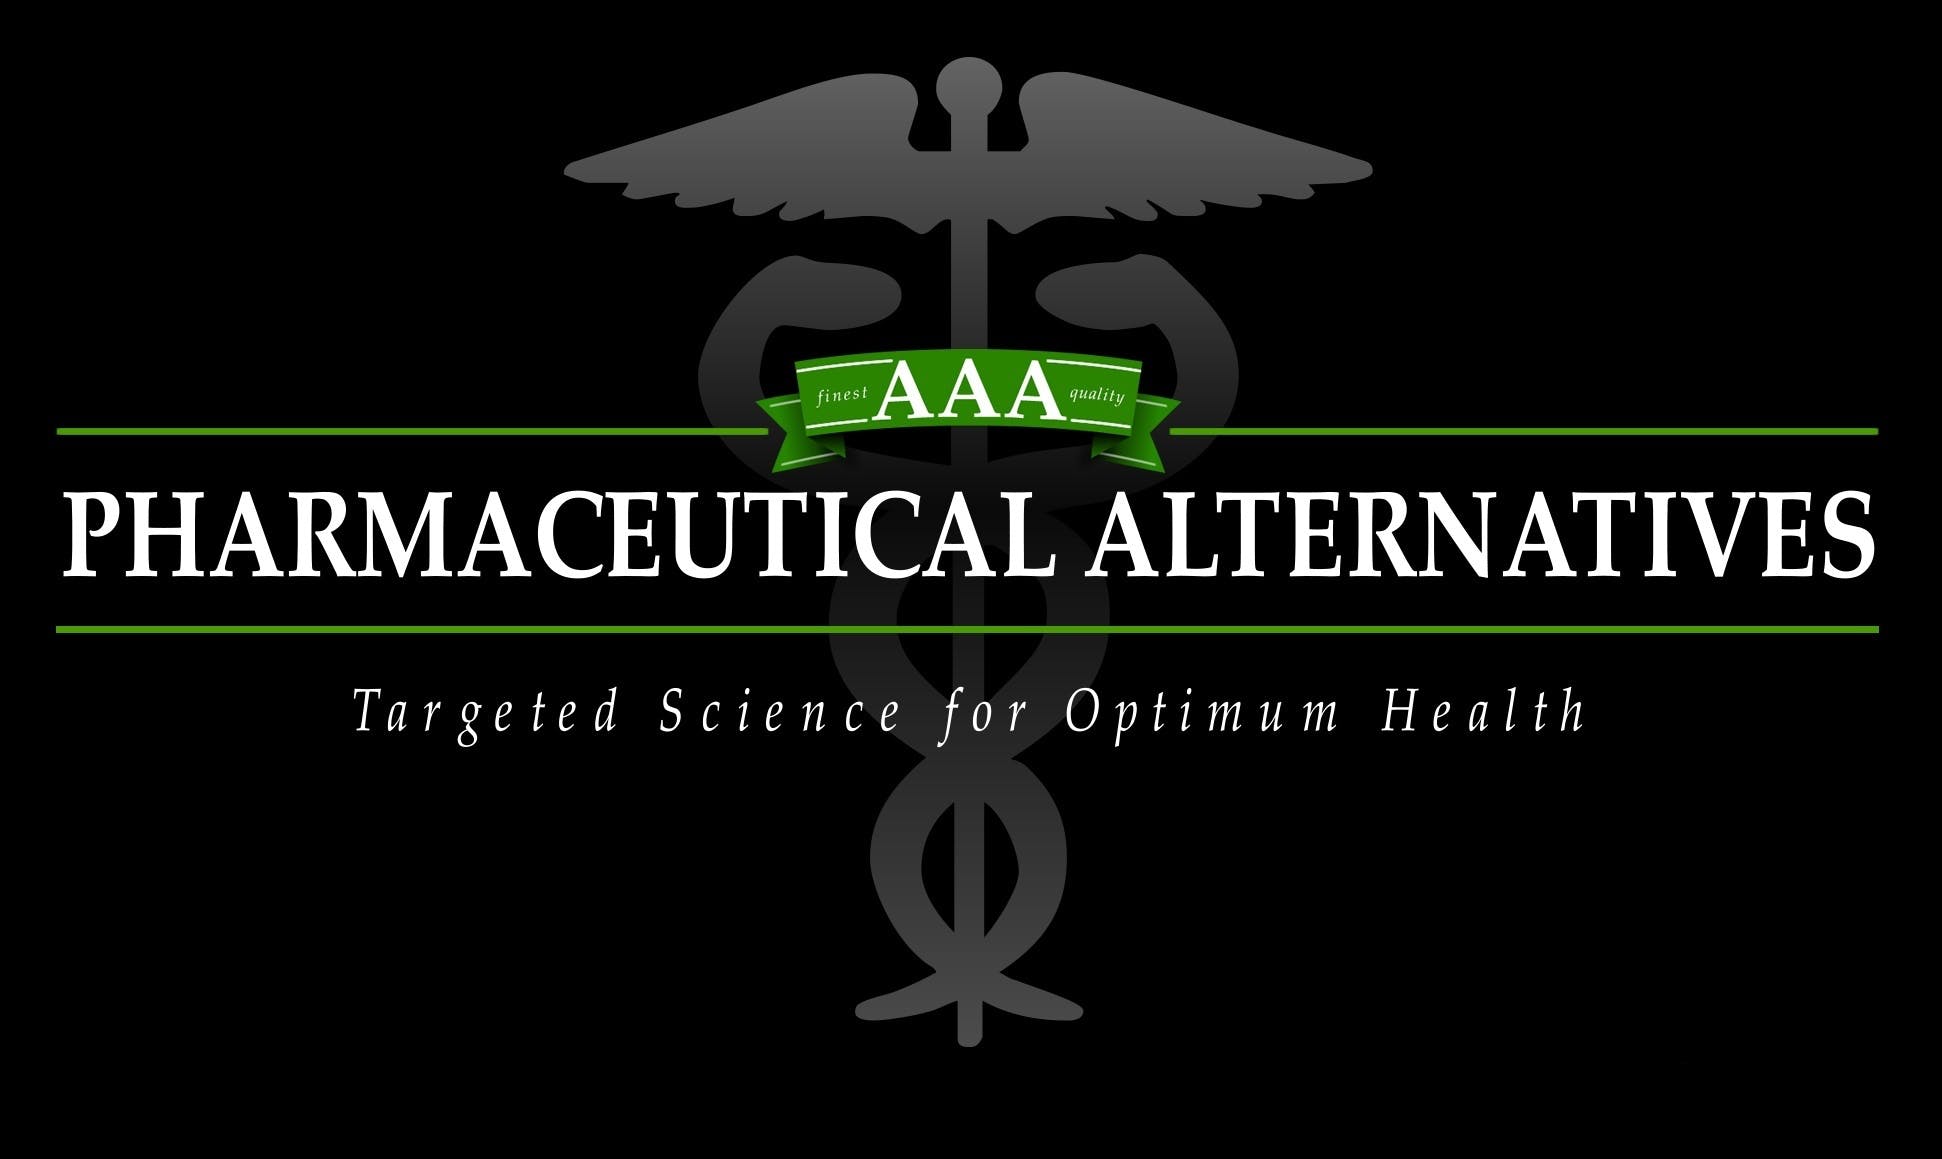 AAA Pharmaceutical Alternatives - Medical Marijuana Doctors - Cannabizme.com